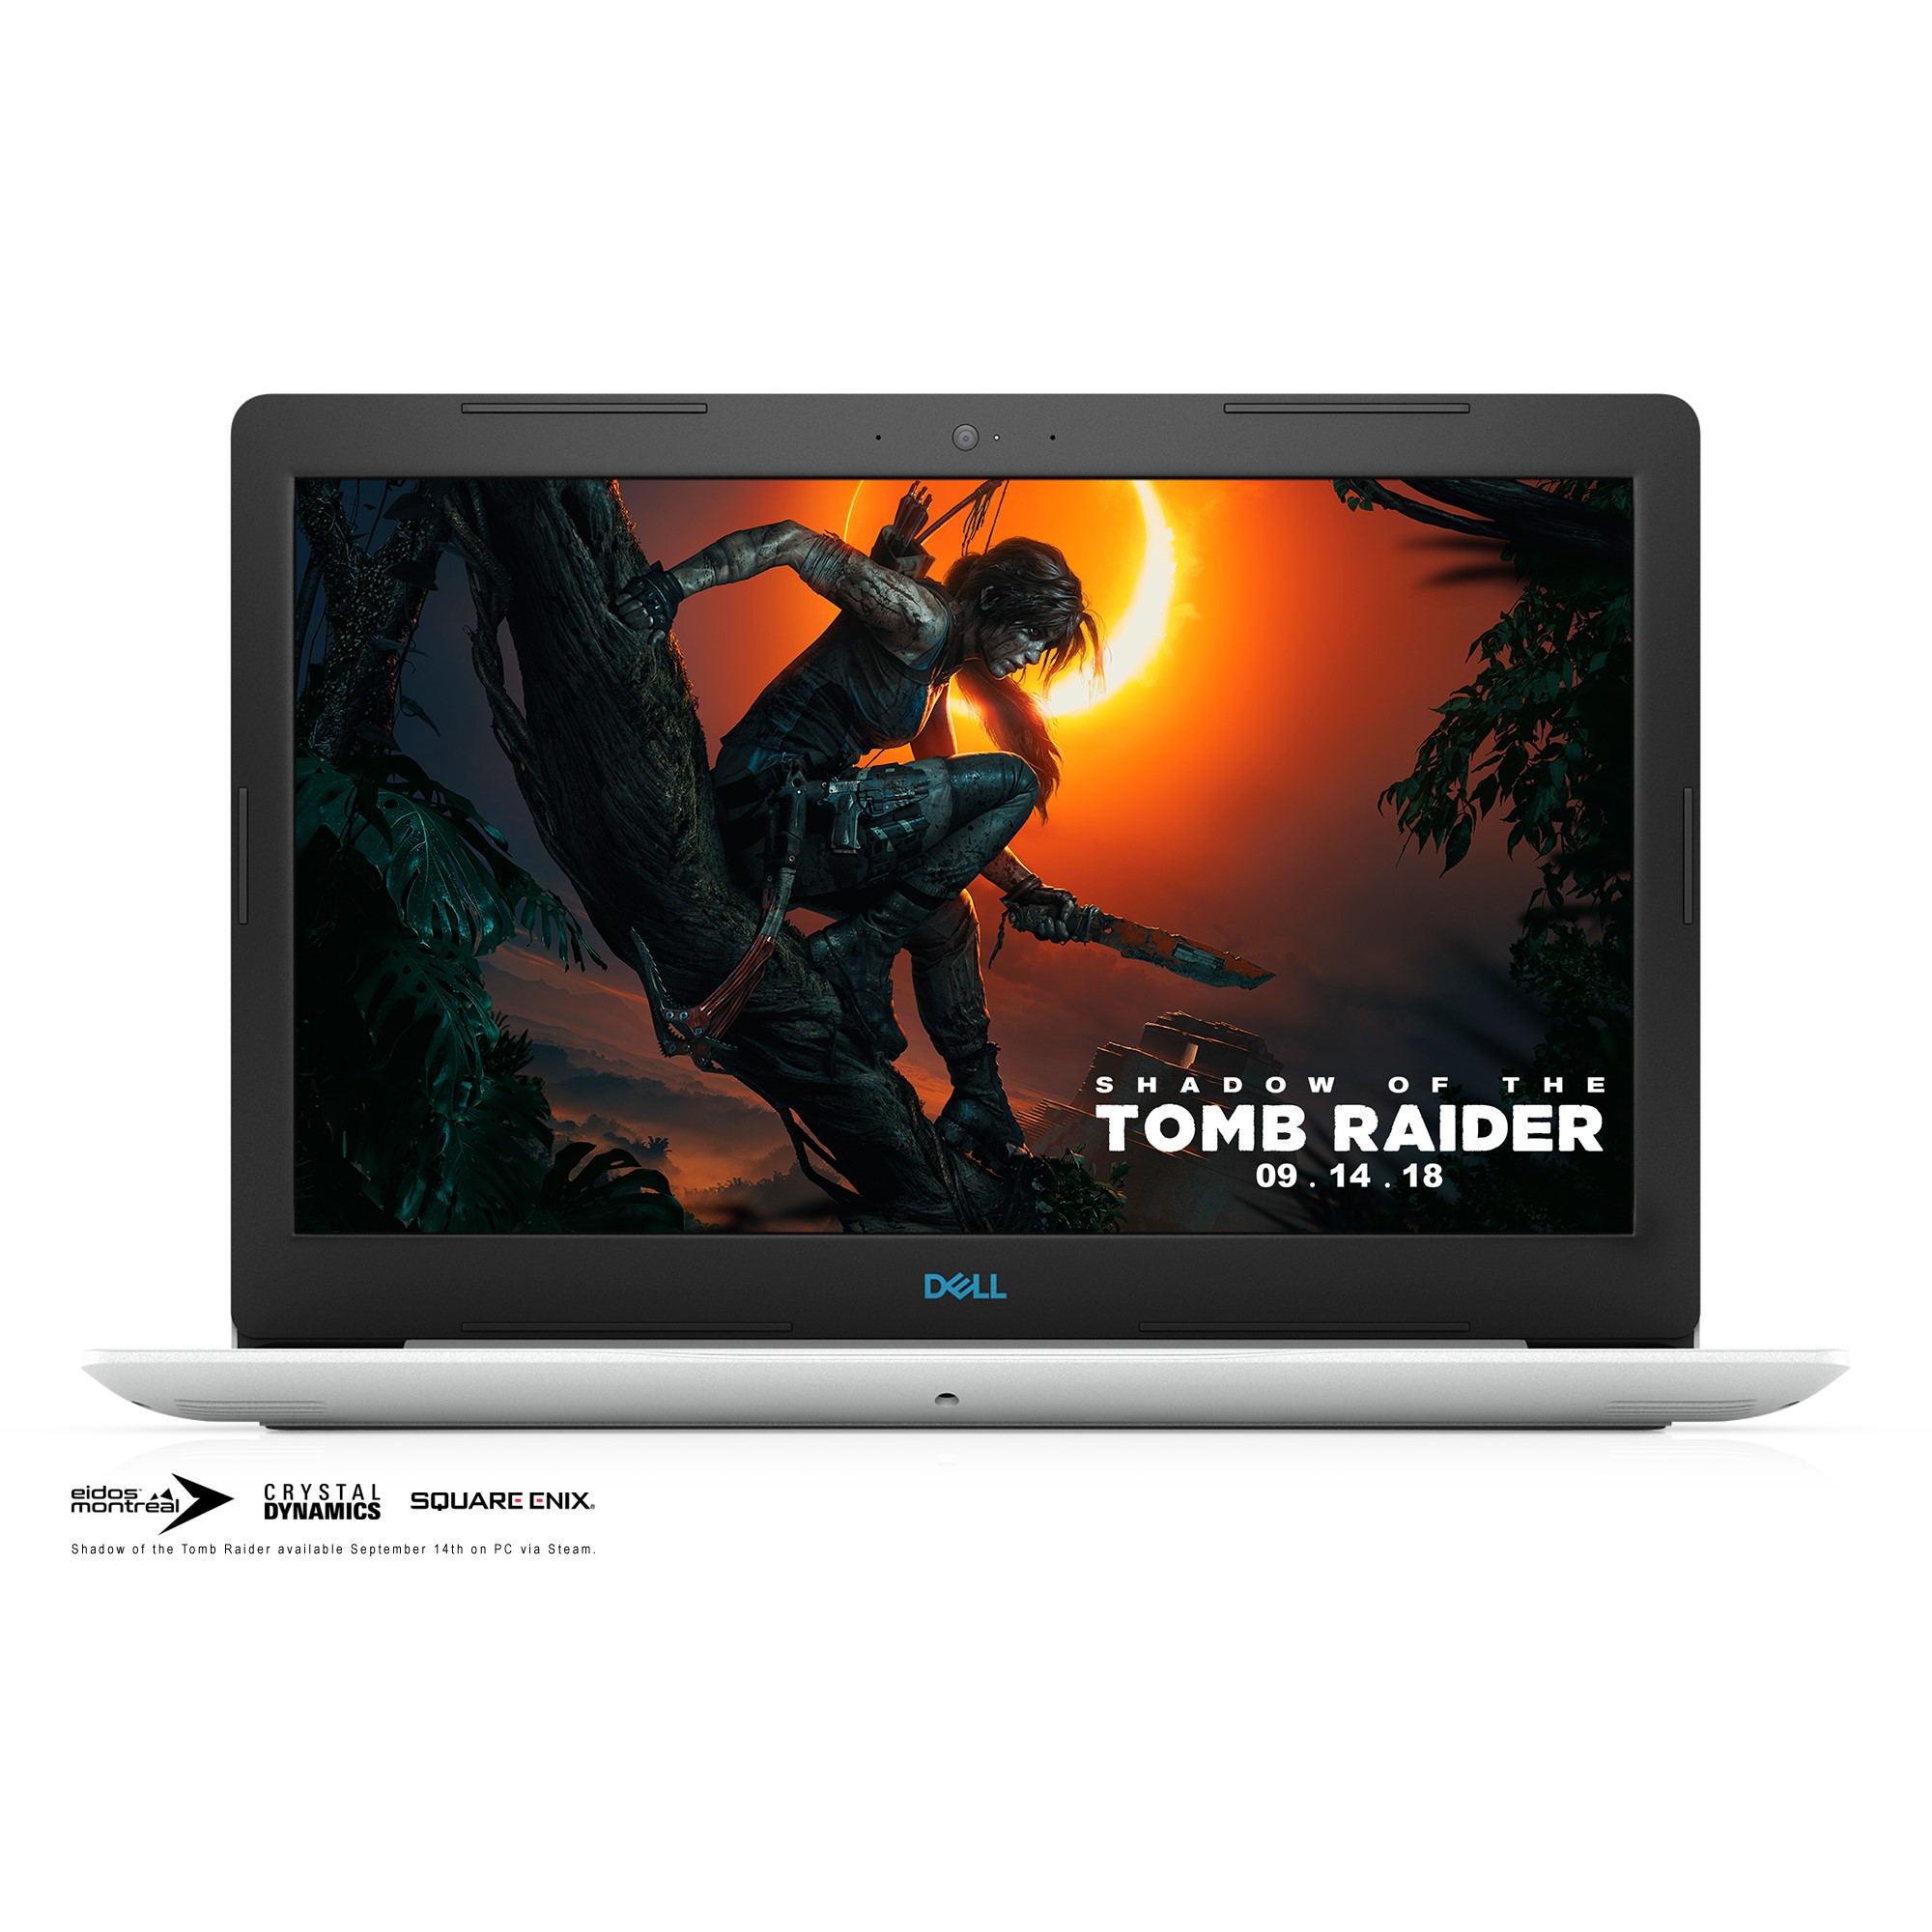 Dell G3 Gaming Laptop 15.6" Full HD, Intel Core i7-8750H, NVIDIA GeForce GTX 1050 Ti 4GB, 1TB HDD + 128GB SSD, 8GB RAM, G3579-7054WHT - image 1 of 6